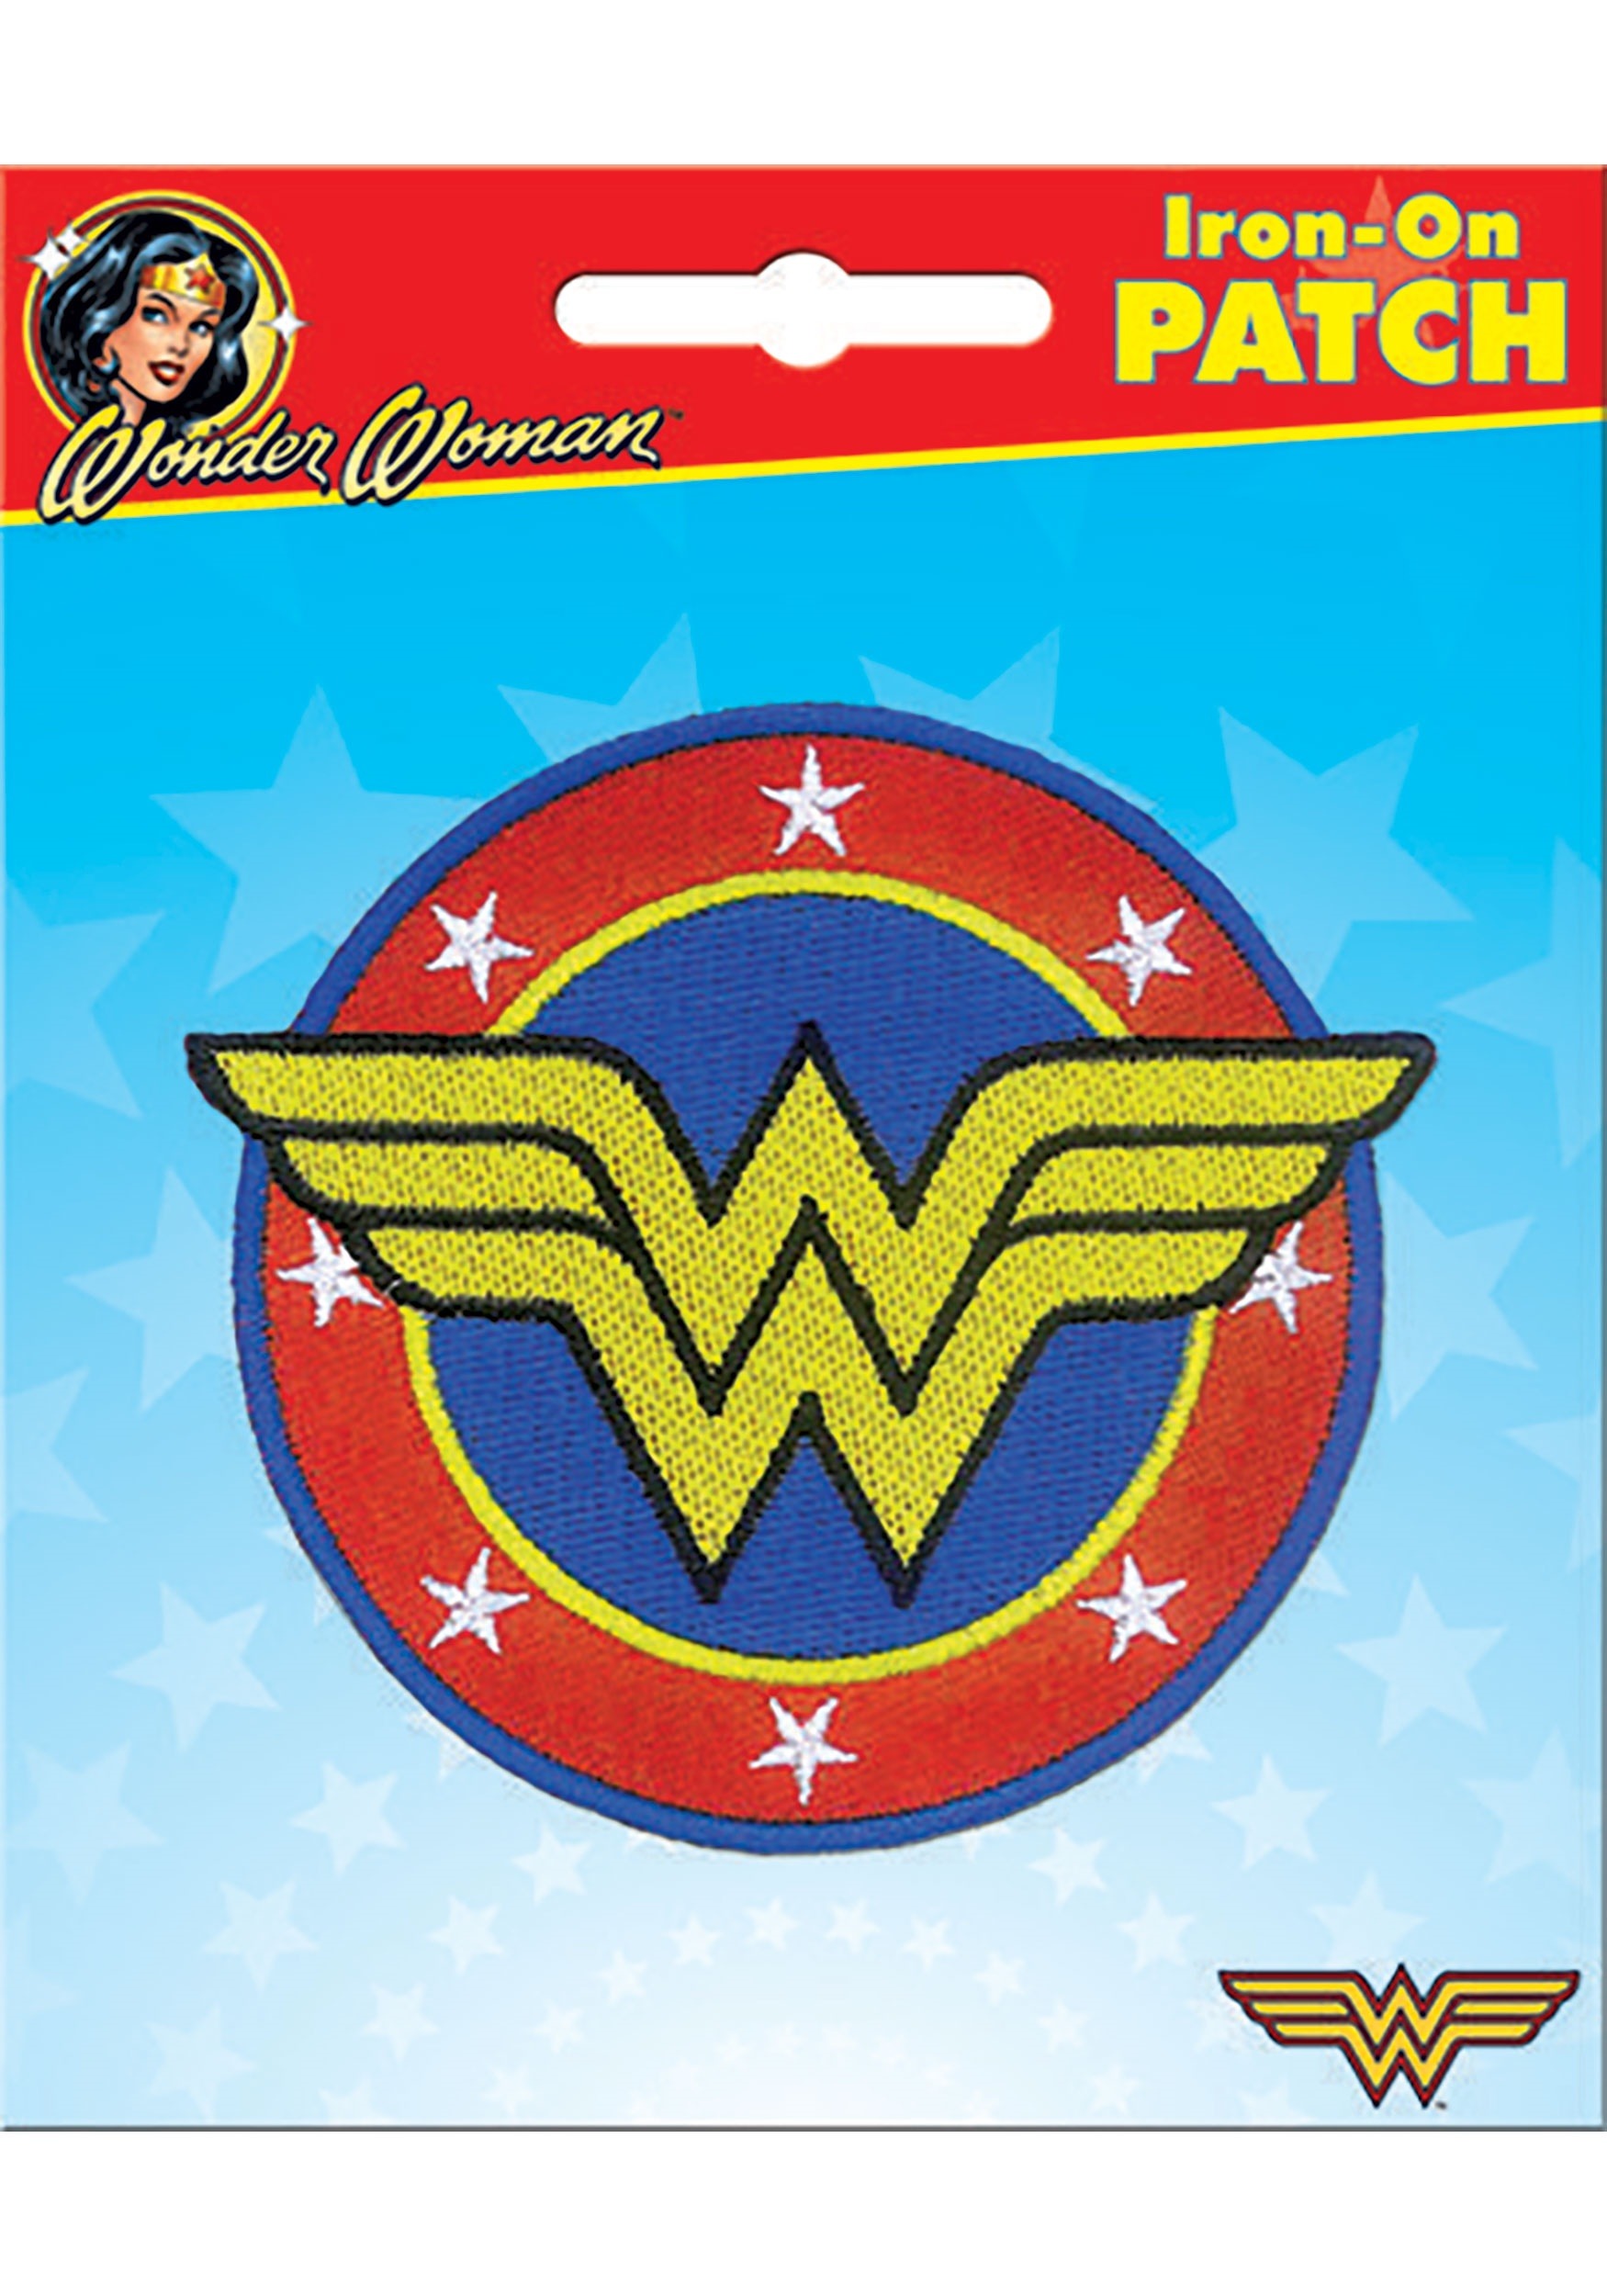 Wonder Woman DC Comics Iron-On Patch